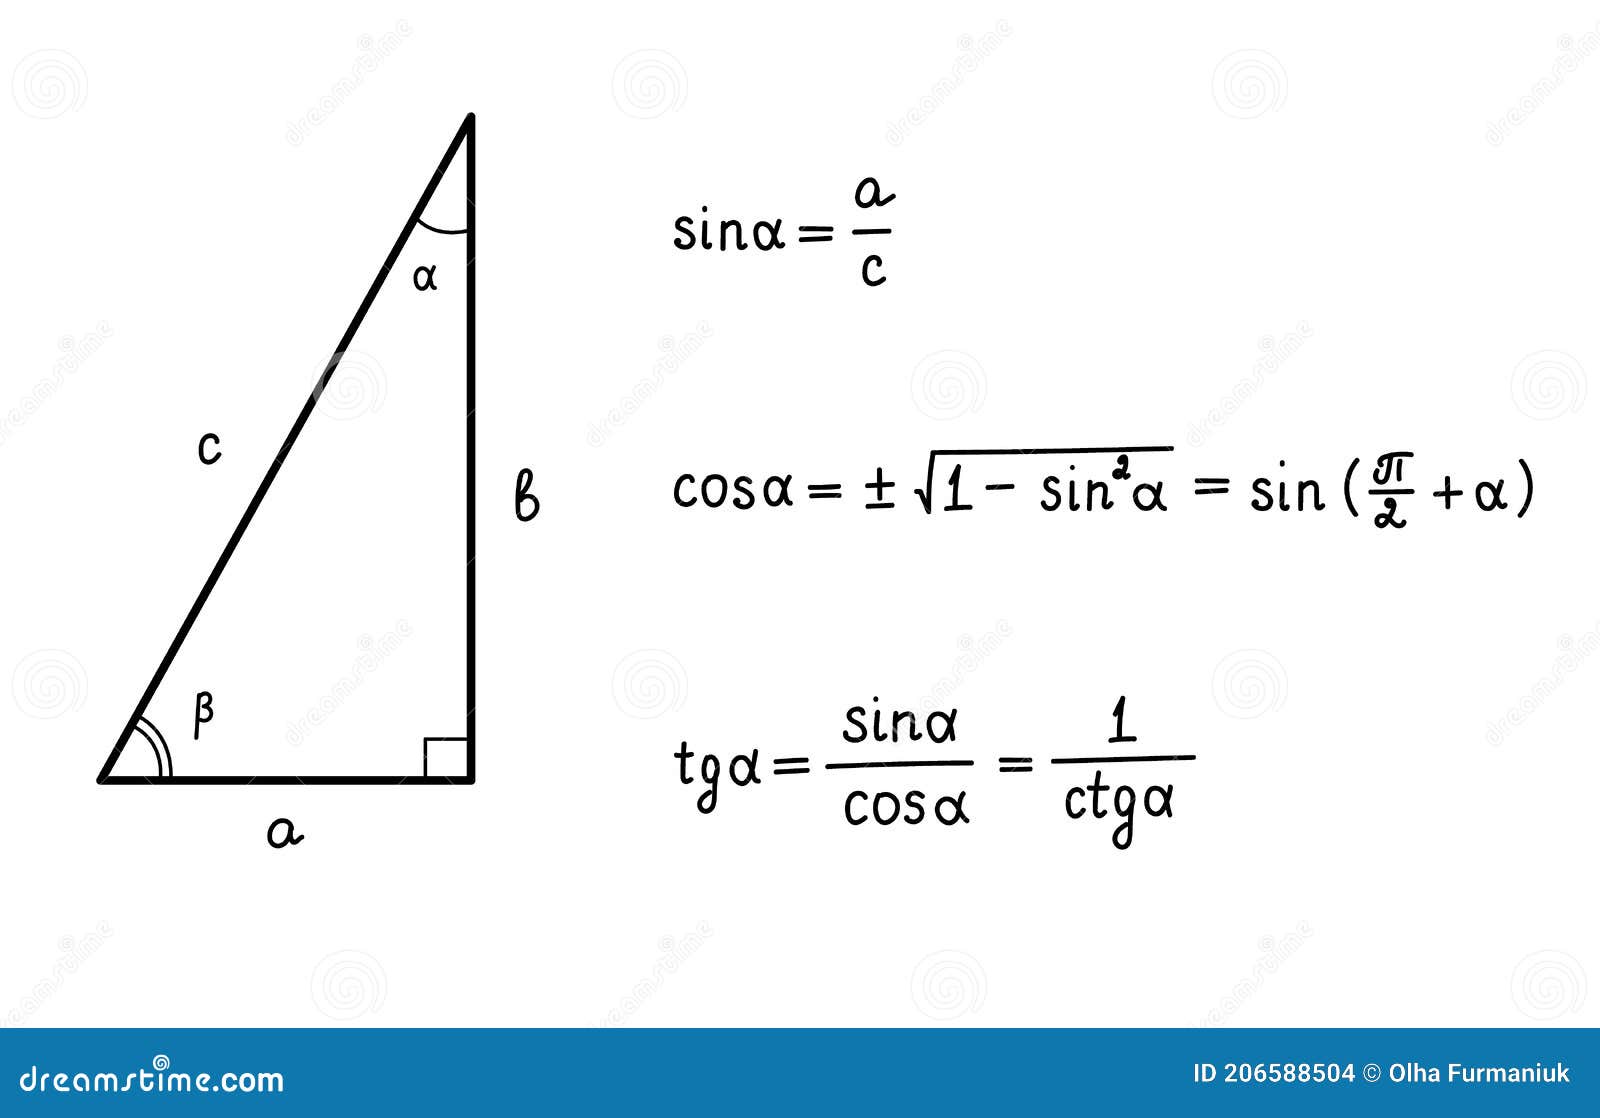 basic trigonometric identities.formulas for calculating sinus,cosine,tangent,cotangent.triangle.education,school program. higher